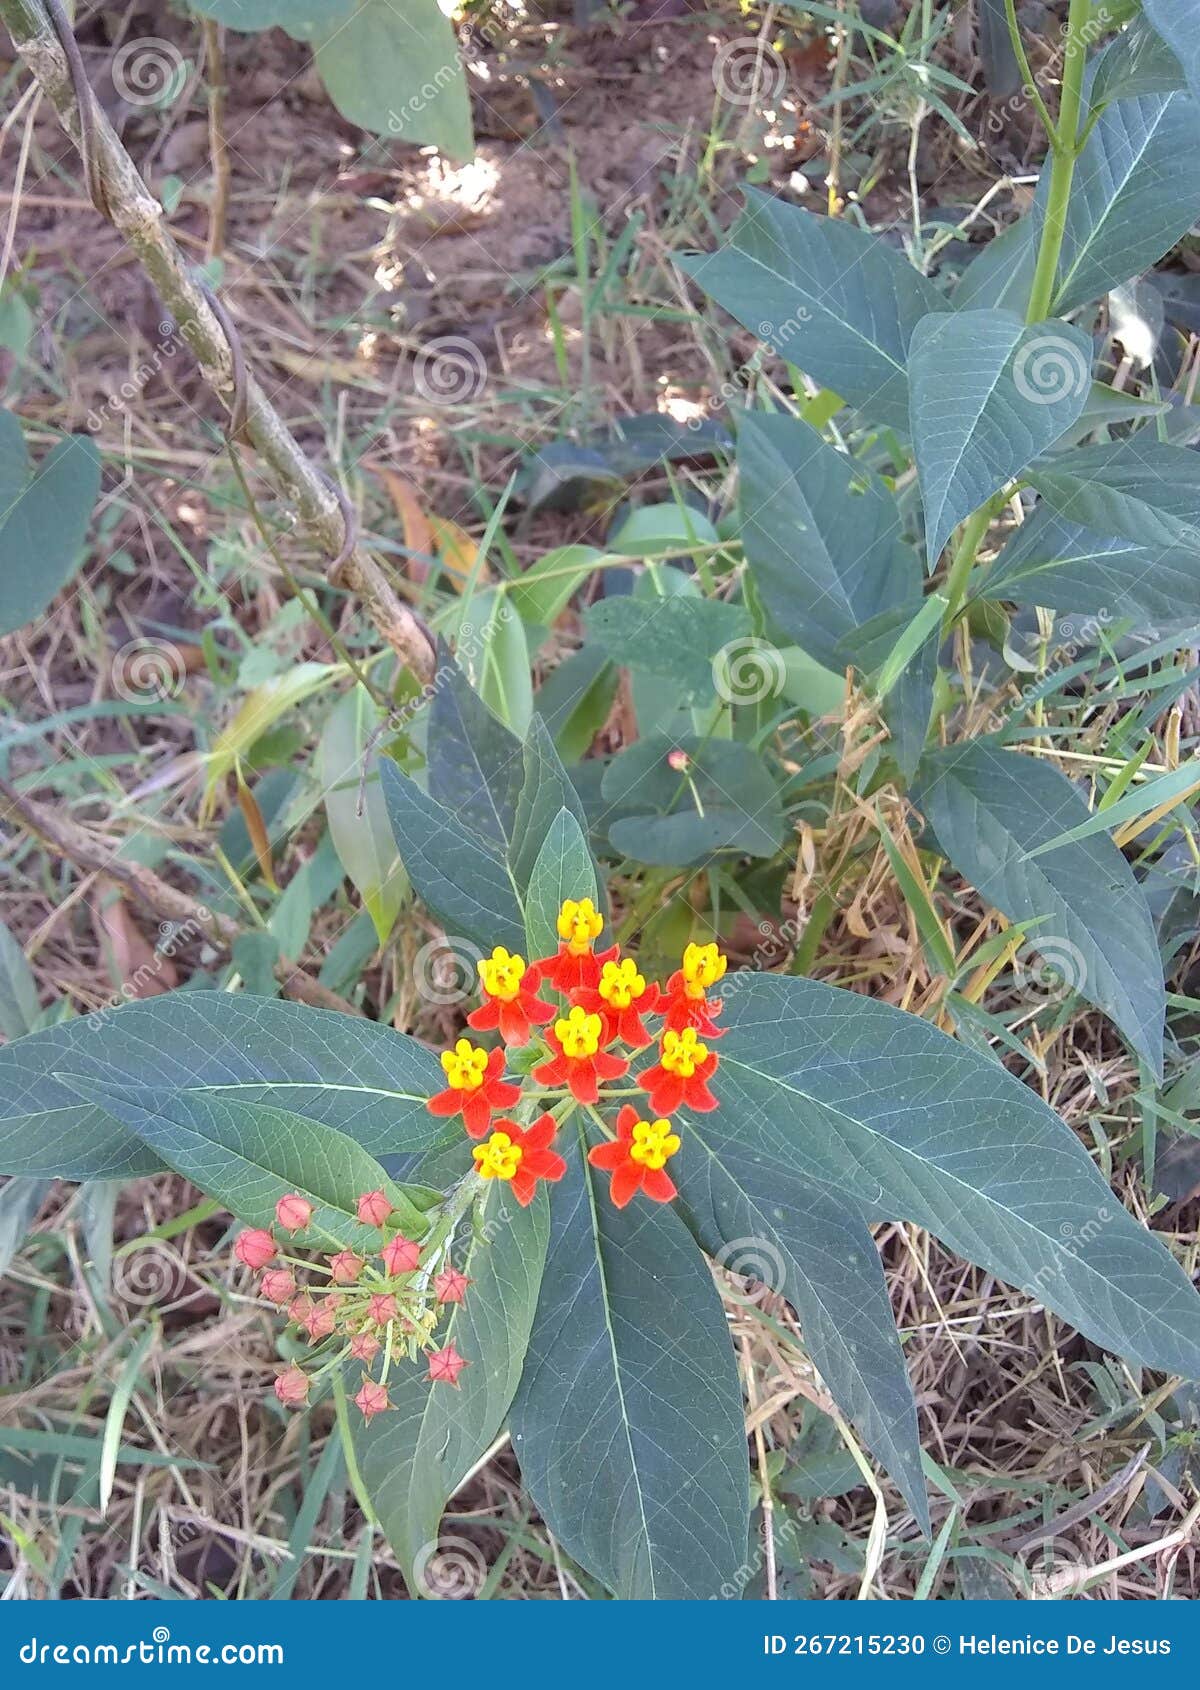 bicho herb flower